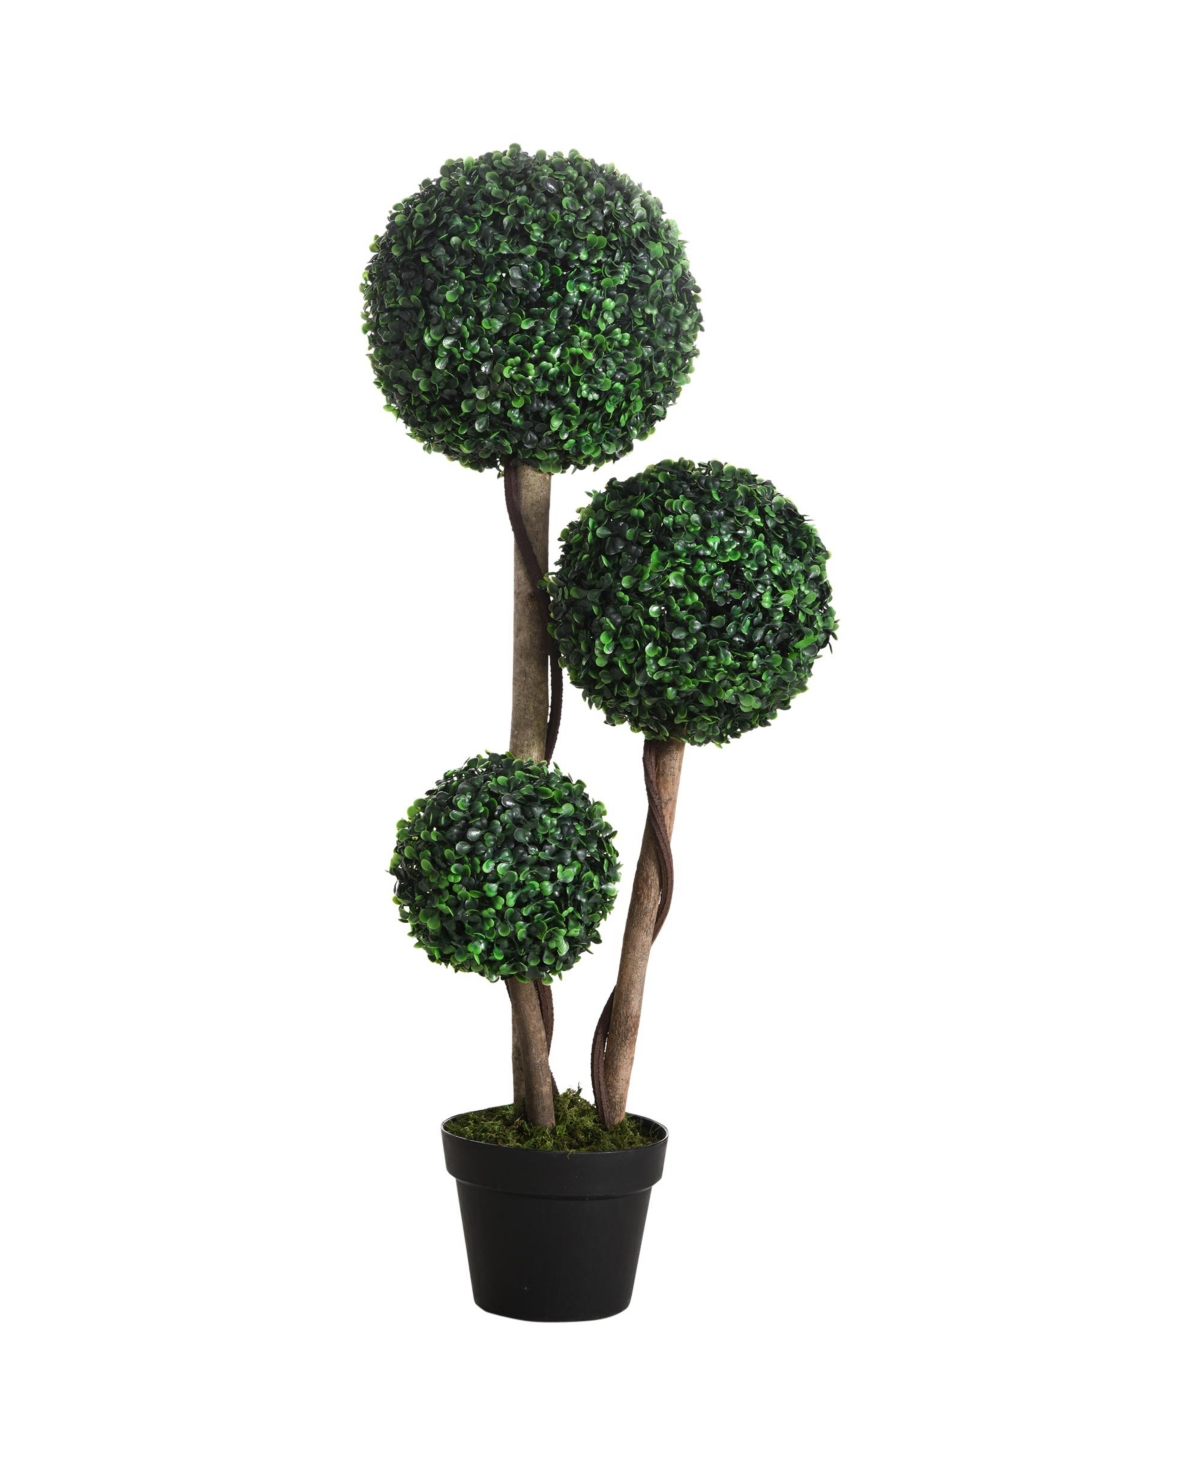 35.5" Indoor & Outdoor Fake Plant Artificial Tree in Pot - Green